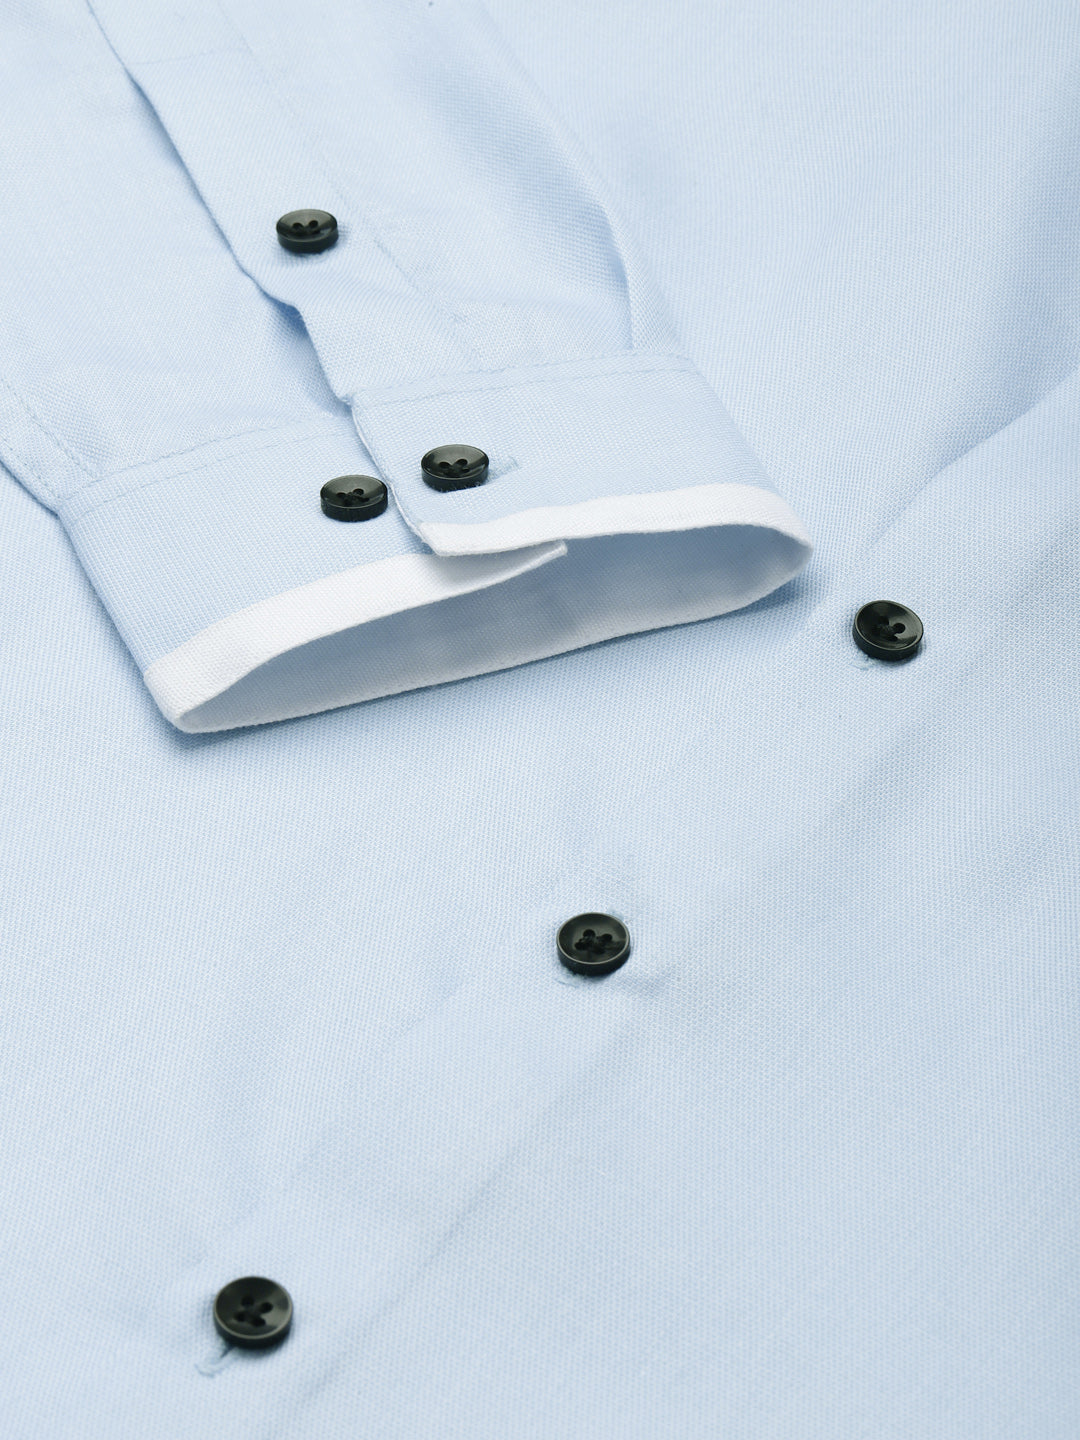 Men's  Cotton Solid Formal Shirts ( SF 796Sky ) - Jainish